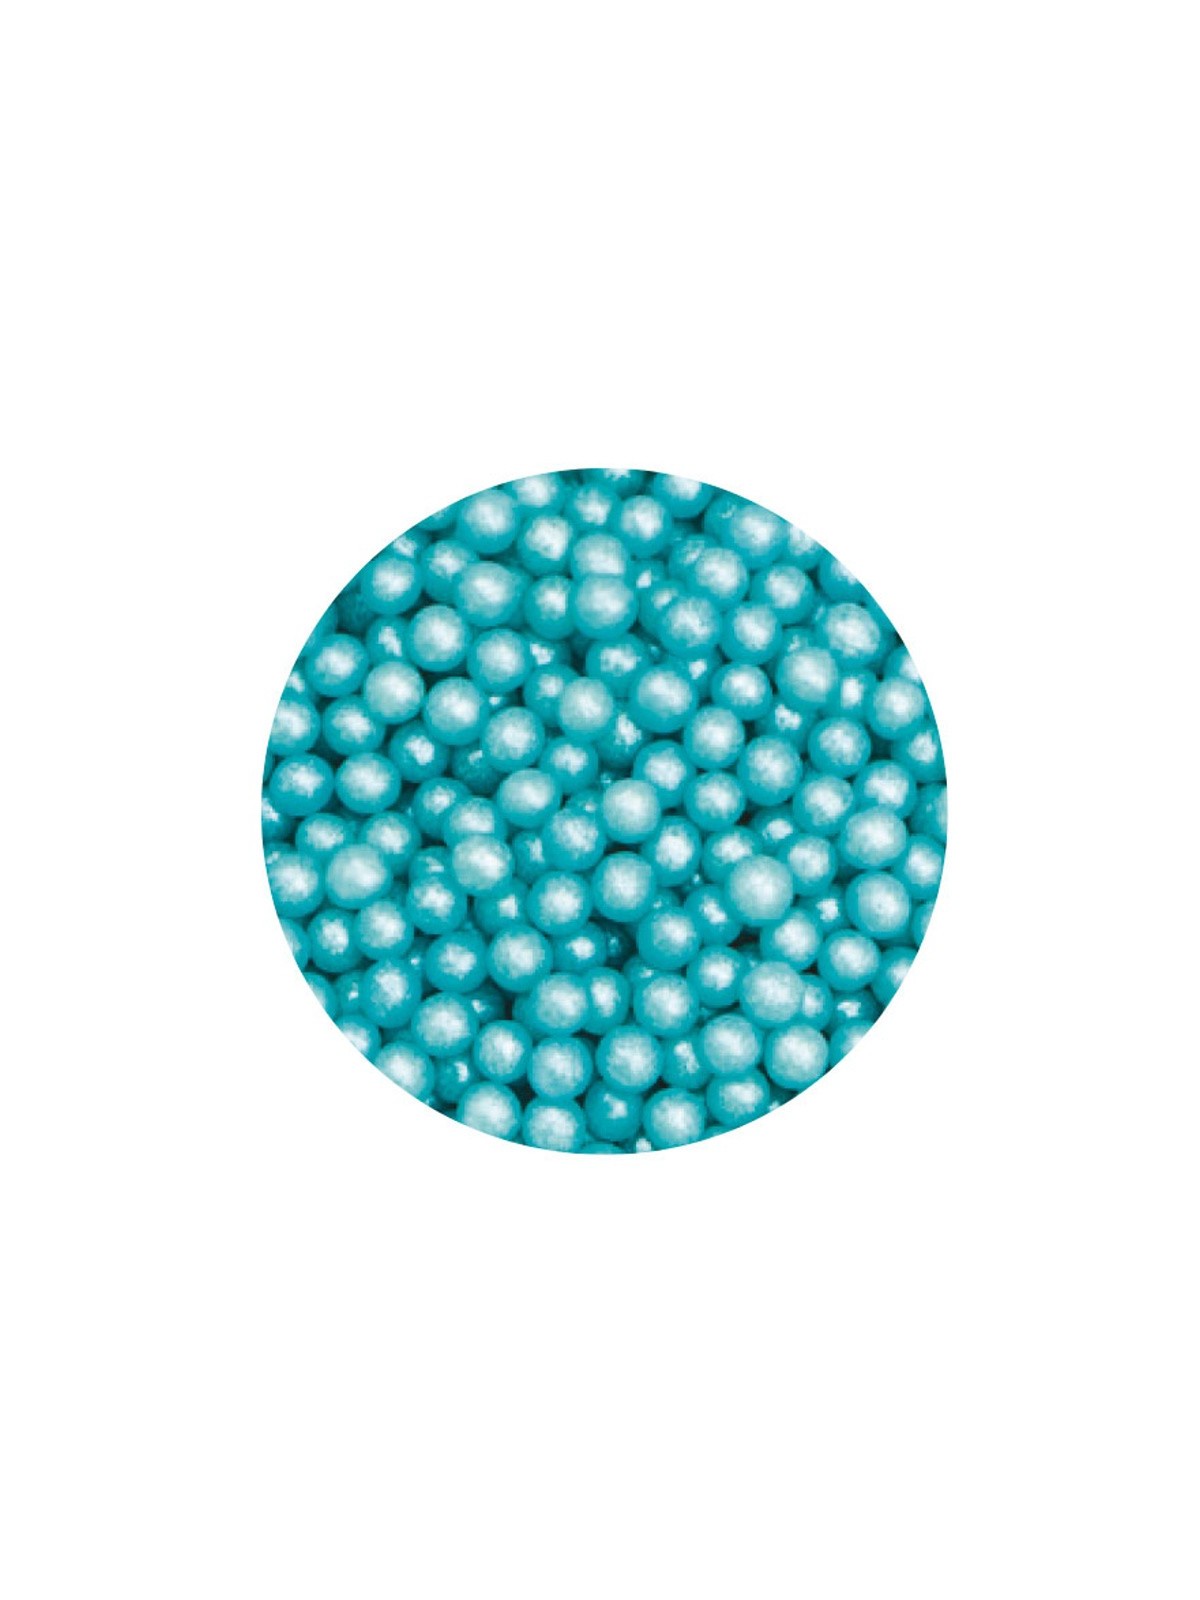 Decora - Sugar beads 4mm - Blue sugar pearls - 100g